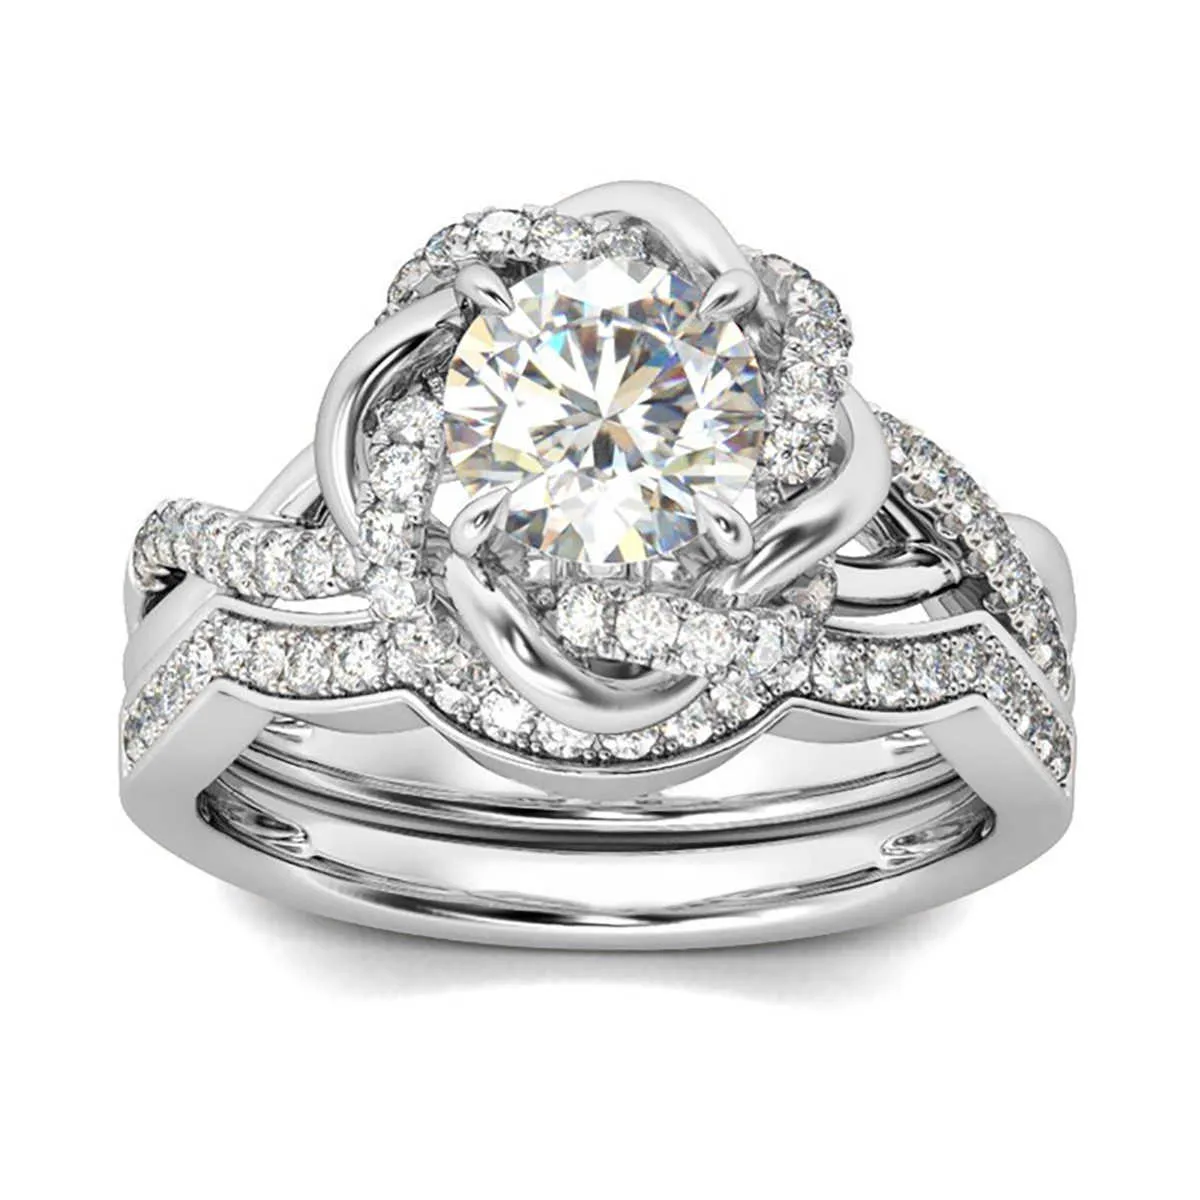 Кольца полосы 3CT Moissanite Diamond Certified Sterling Silver 925 Ring Set Twist Floral Luxury помолвка свадебные украшения для женщин